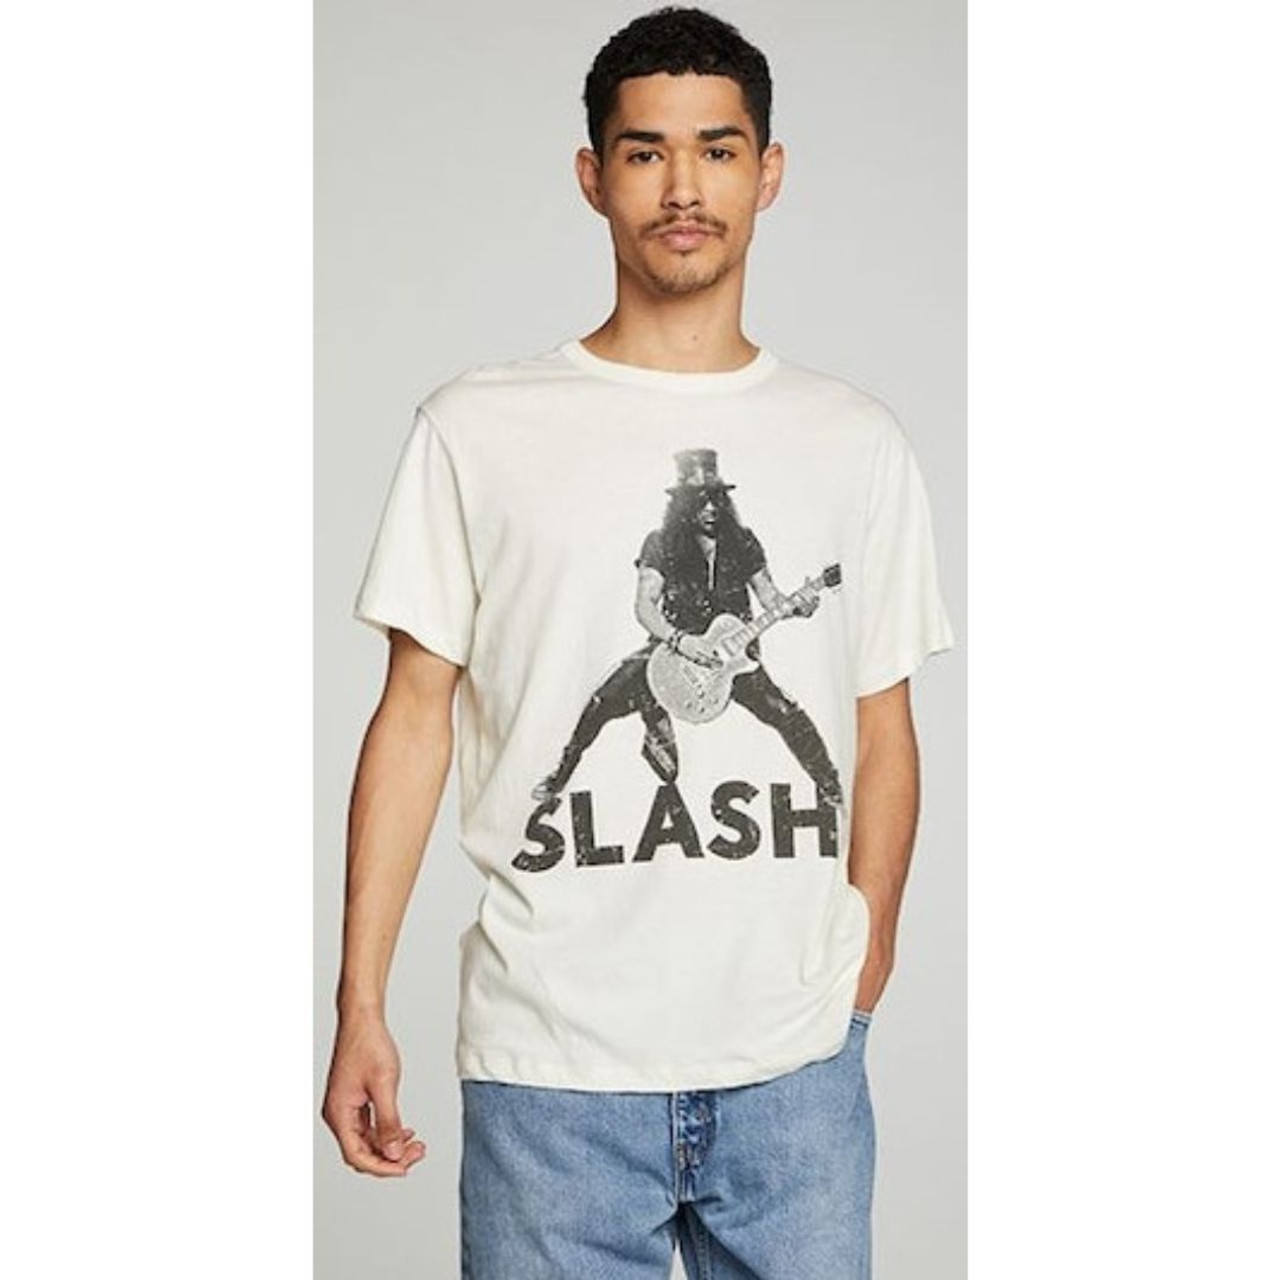 Slash from Guns N' Roses Men's Fashion T-shirt by Chaser